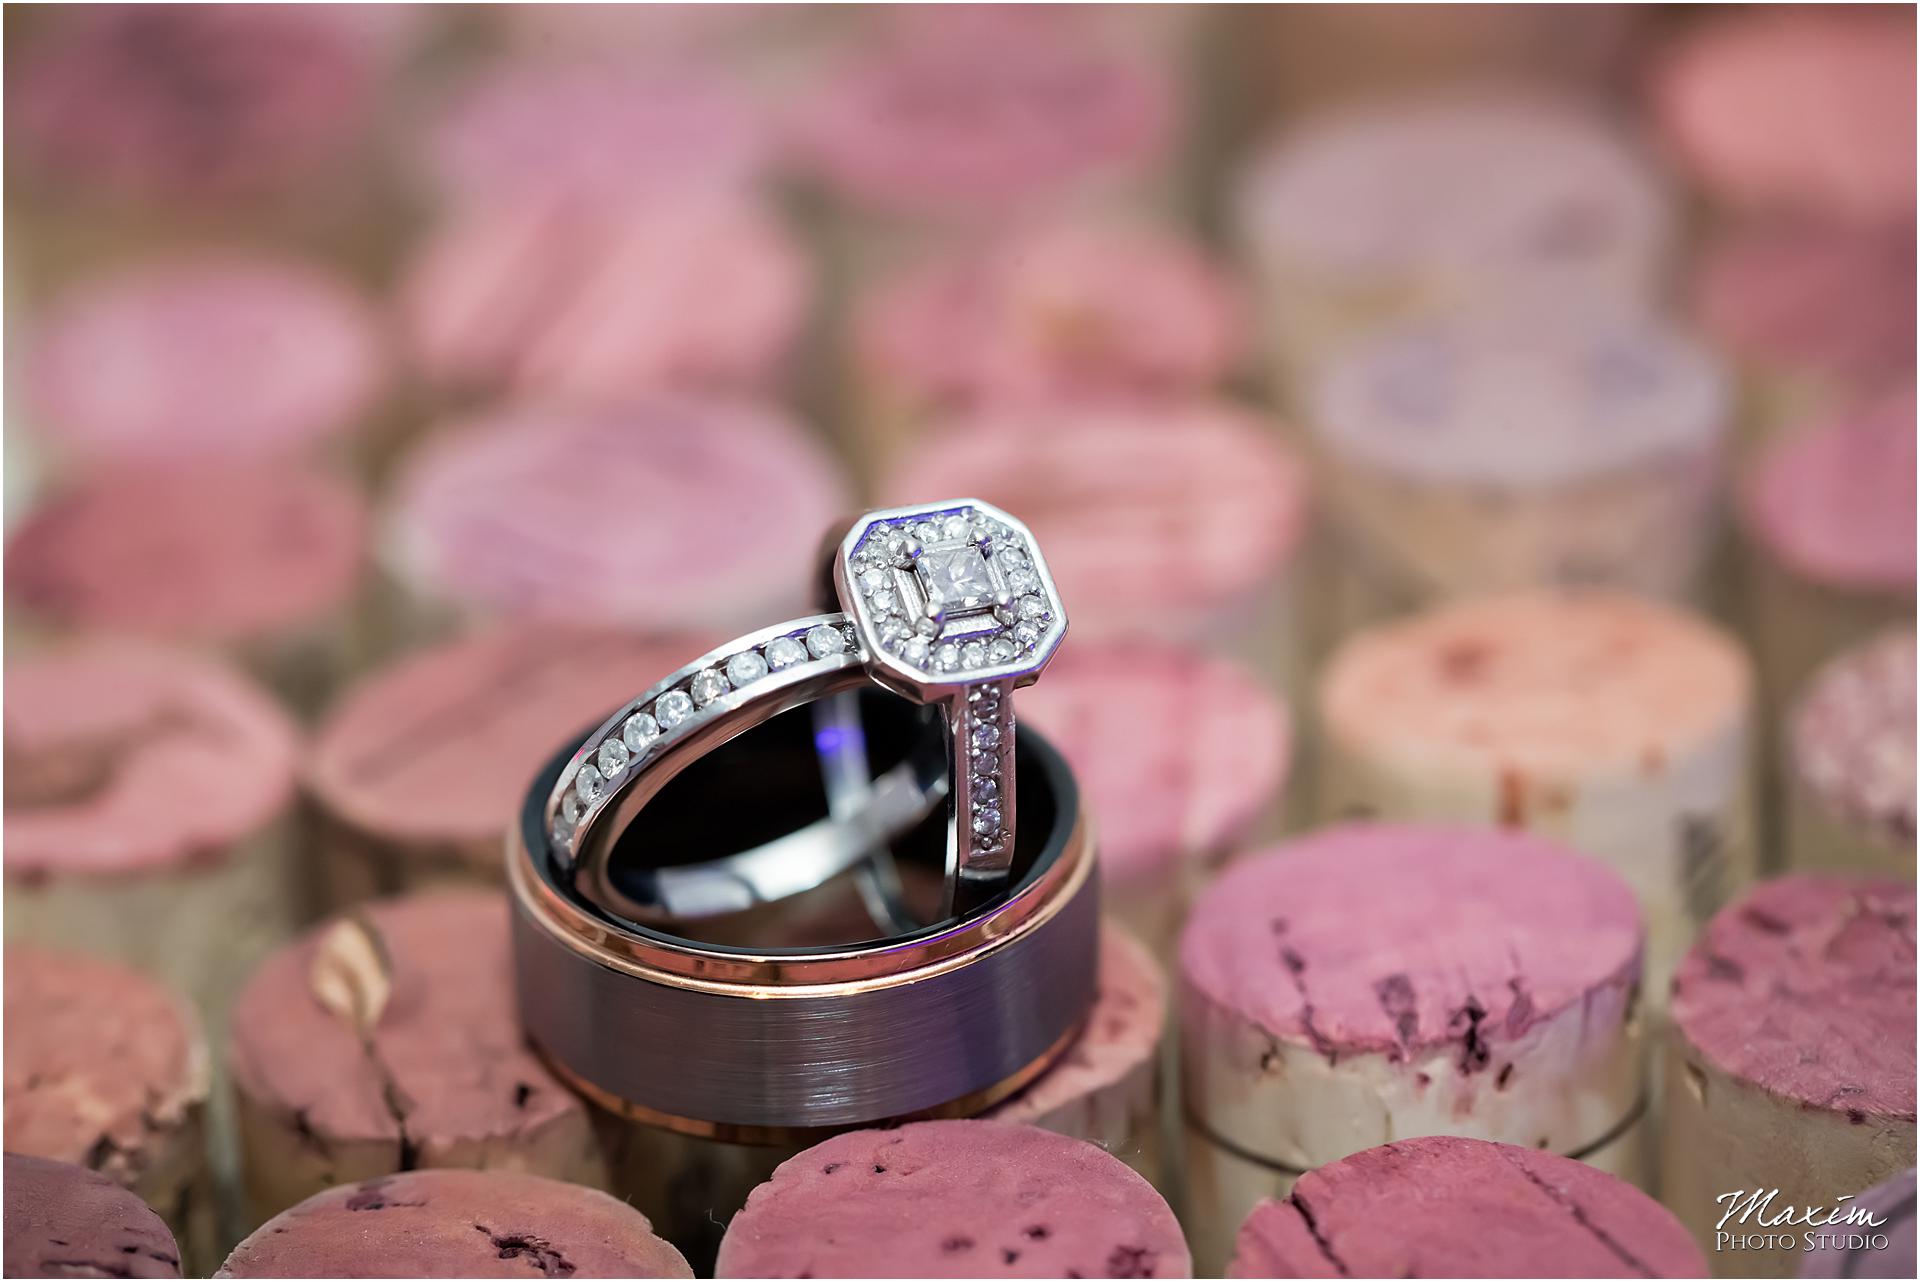 The Center Cincinnati Wedding Ring